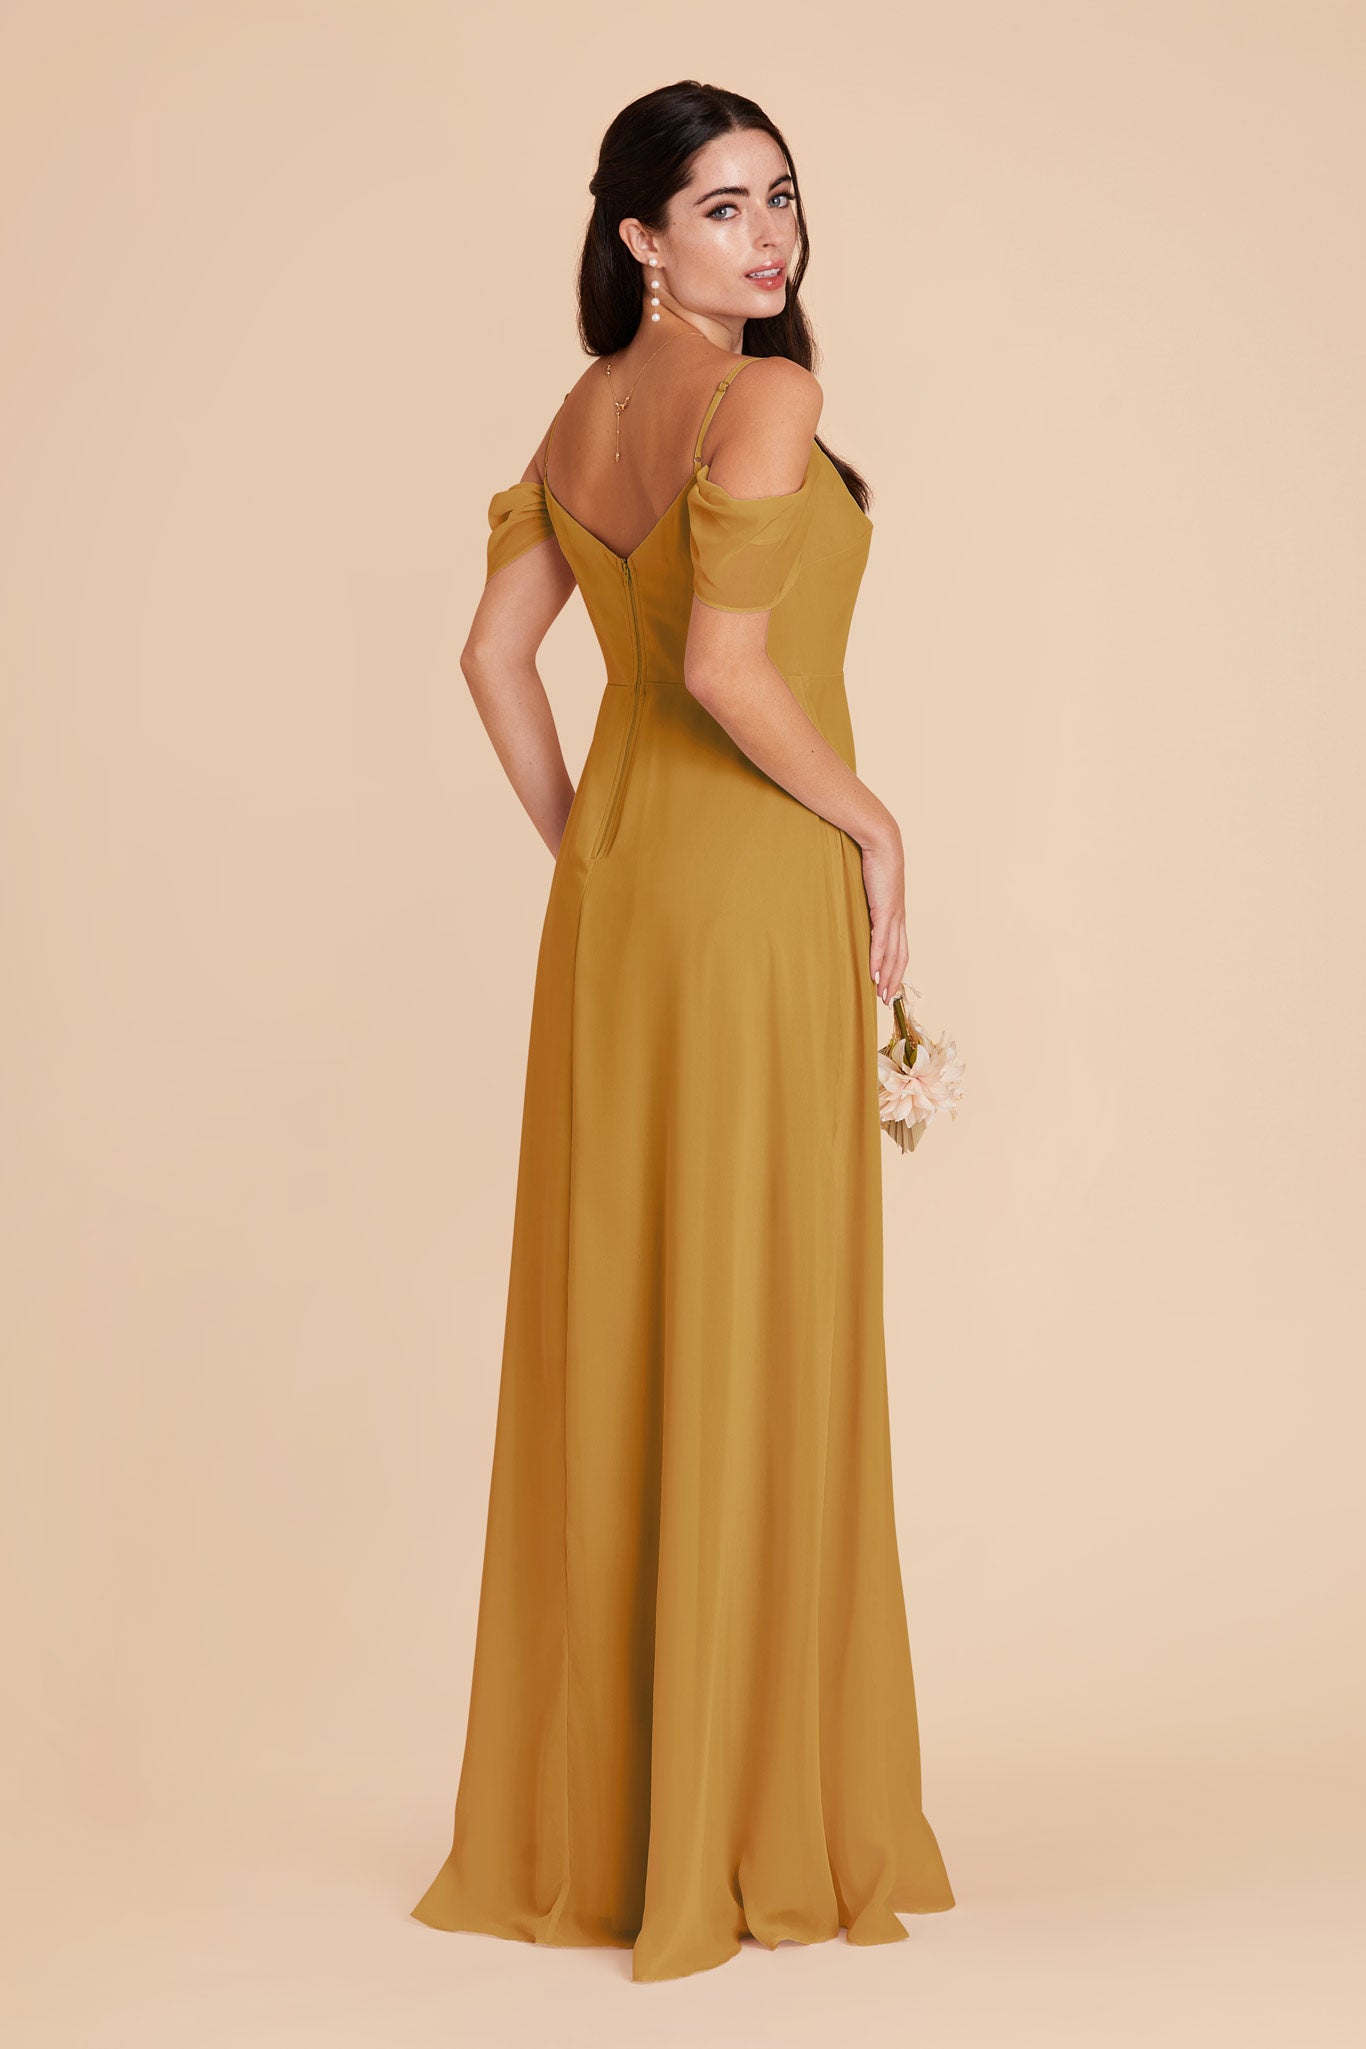 Marigold Devin Convertible Dress by Birdy Grey